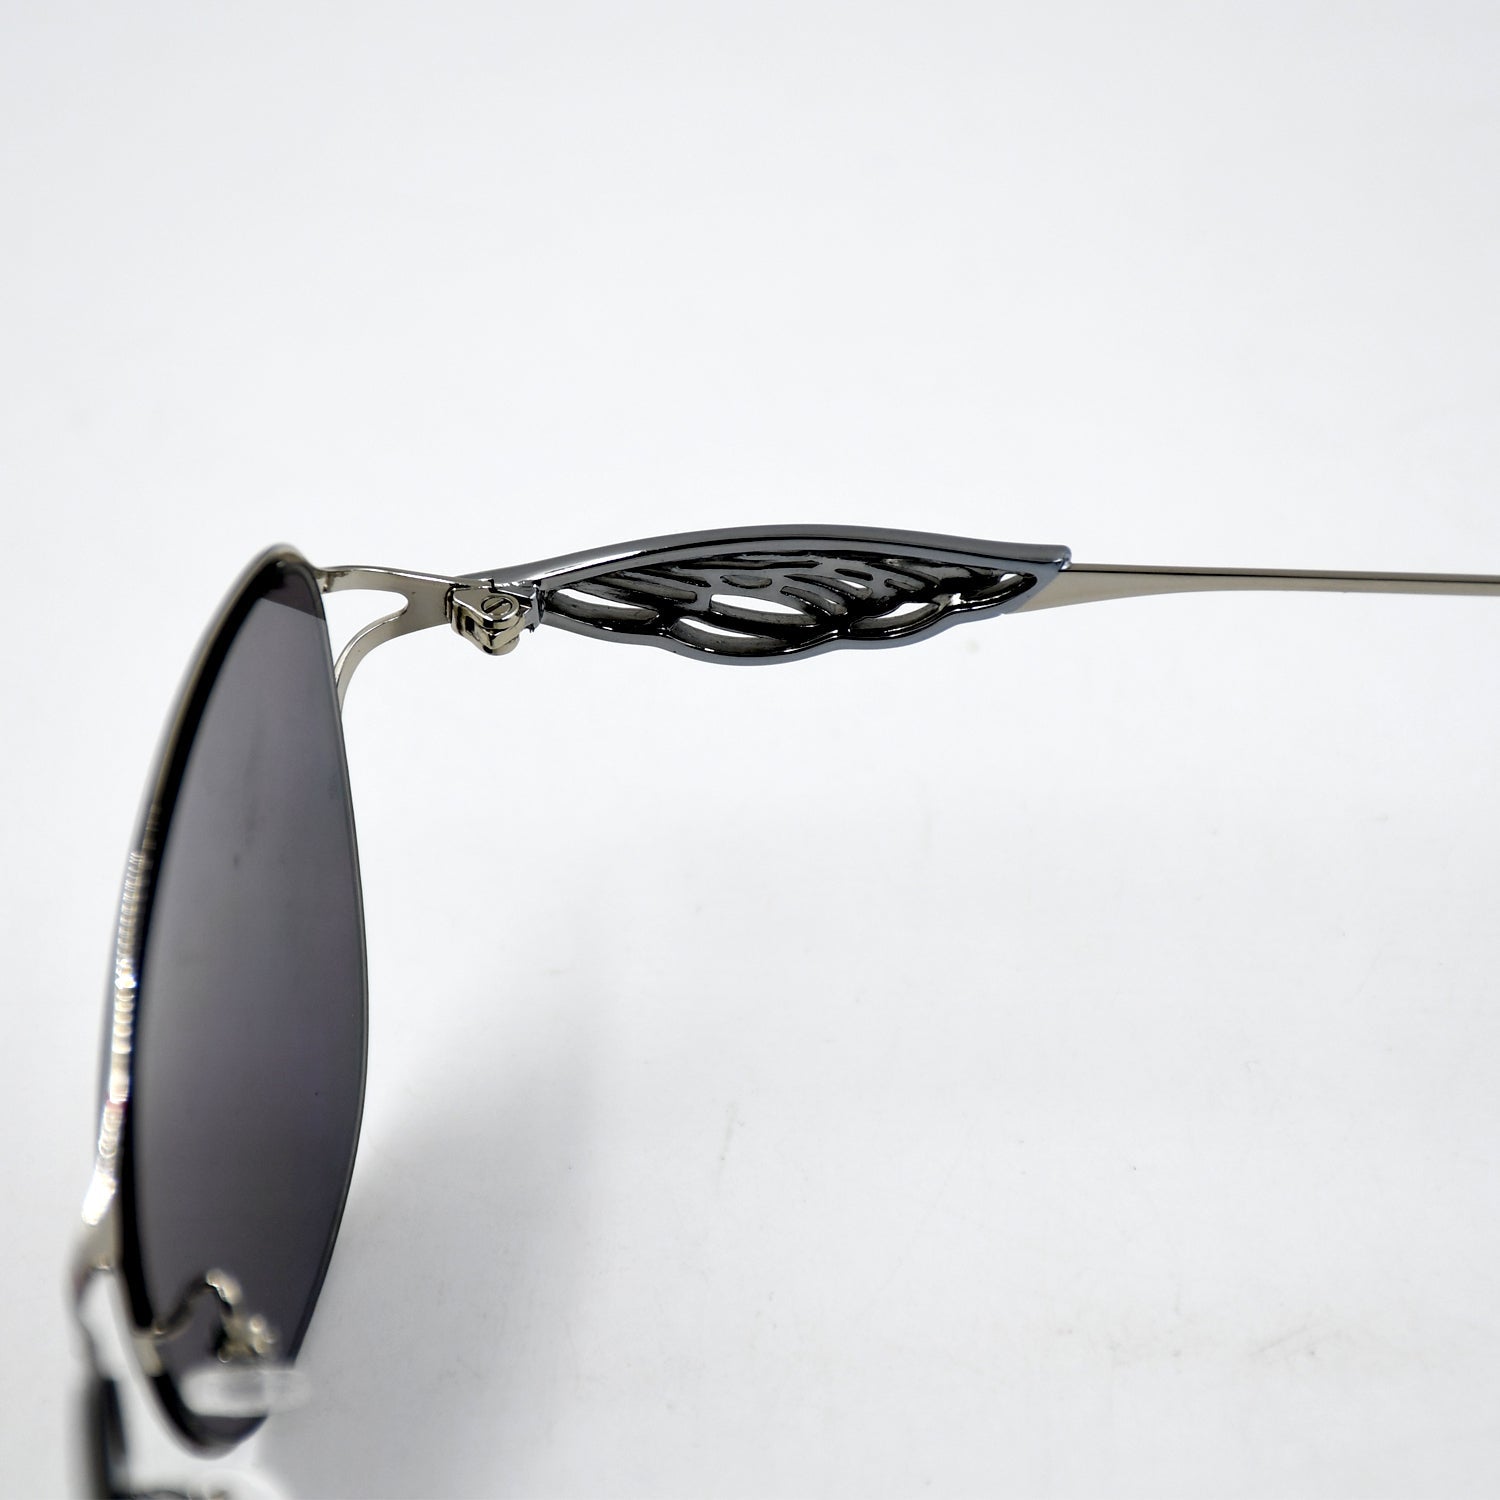 Classic Sunglasses for Men & Women, UV Protected, Lightweight